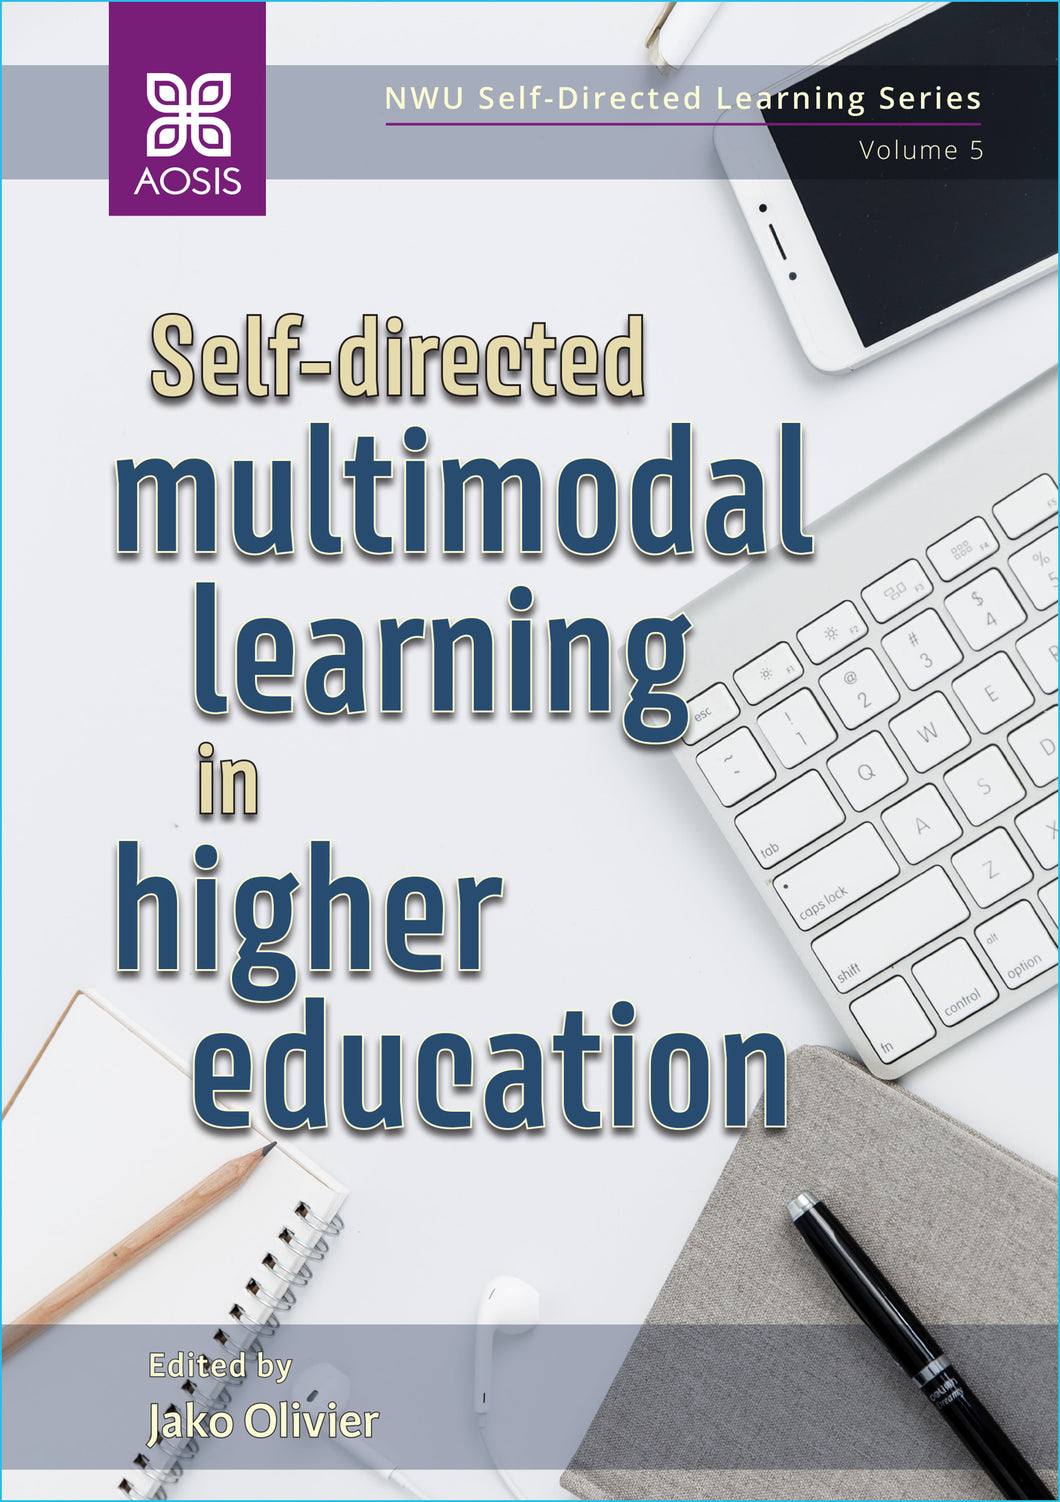 Self-directed multimodal learning in higher education (ePub Digital Downloads)